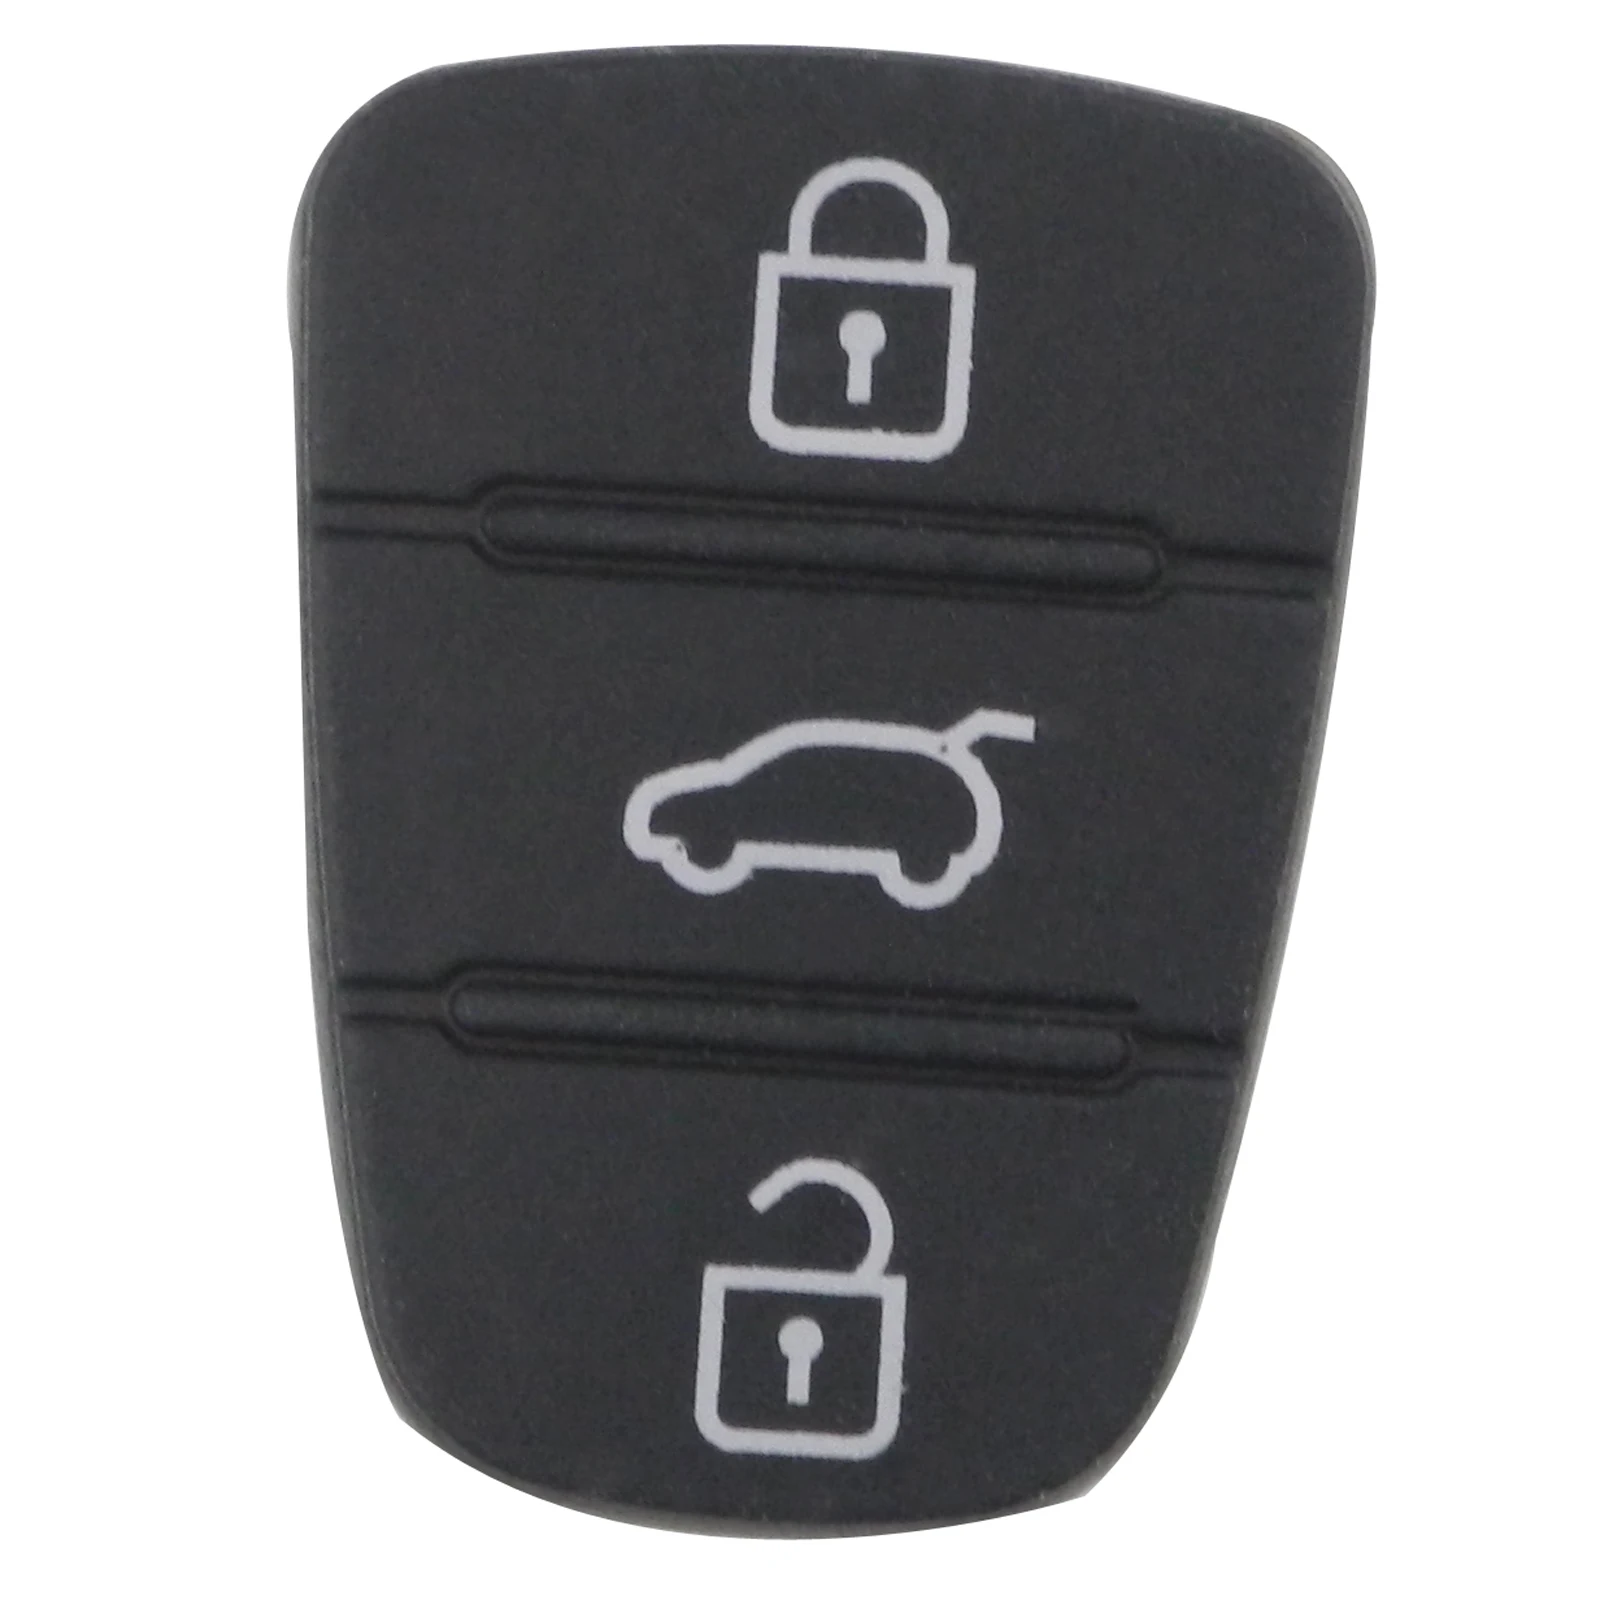 3 BTN флип силиконовый ButtonPad чехол для дистанционного ключа от машины крышка RubberPad для Kia RIO 3 Picanto Ceed Cerato Sportage Soul hyundai i35/25 - Количество кнопок: B Type